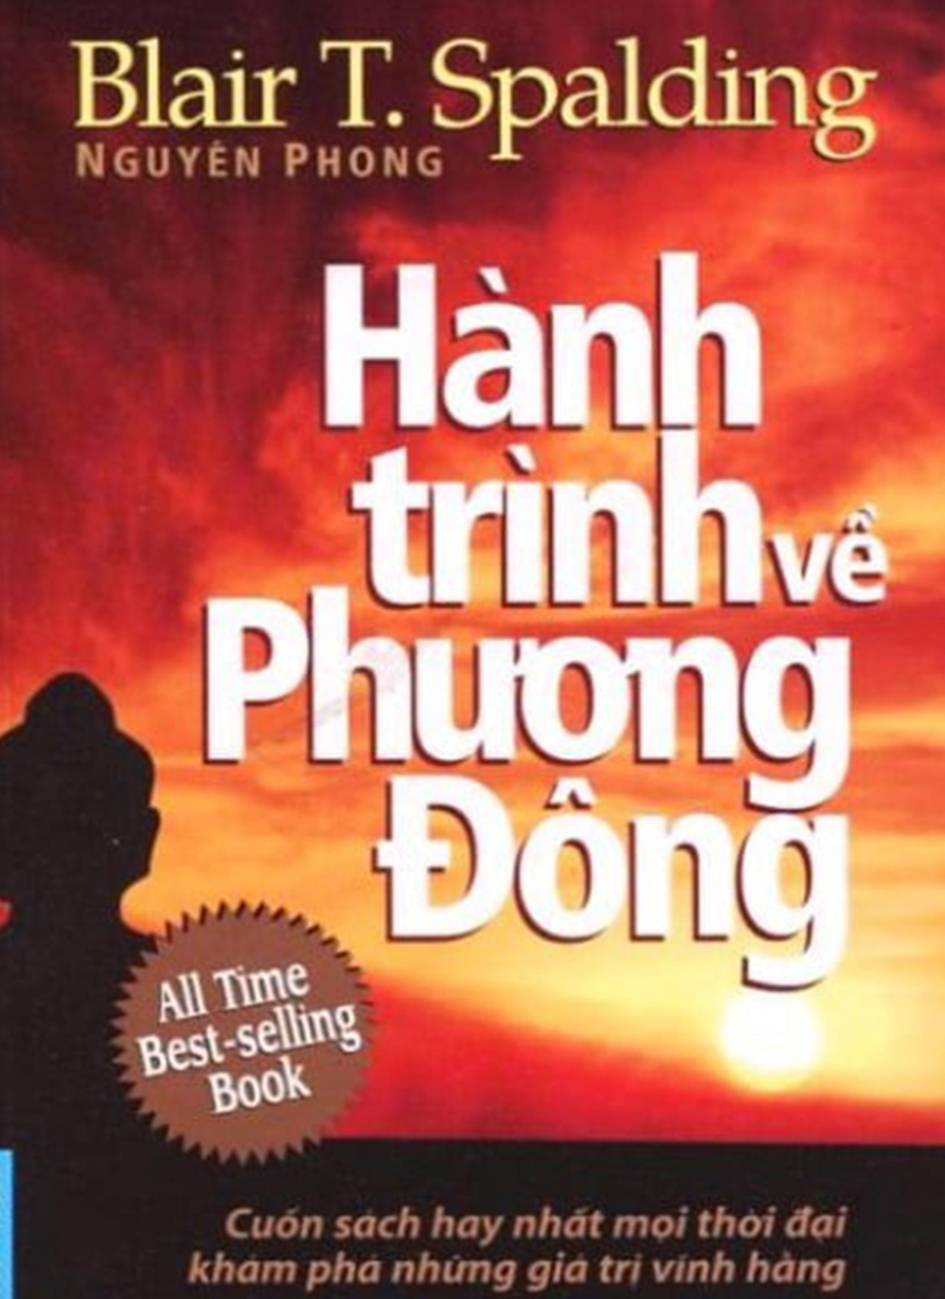 hanh trinh ve phuong dong 1